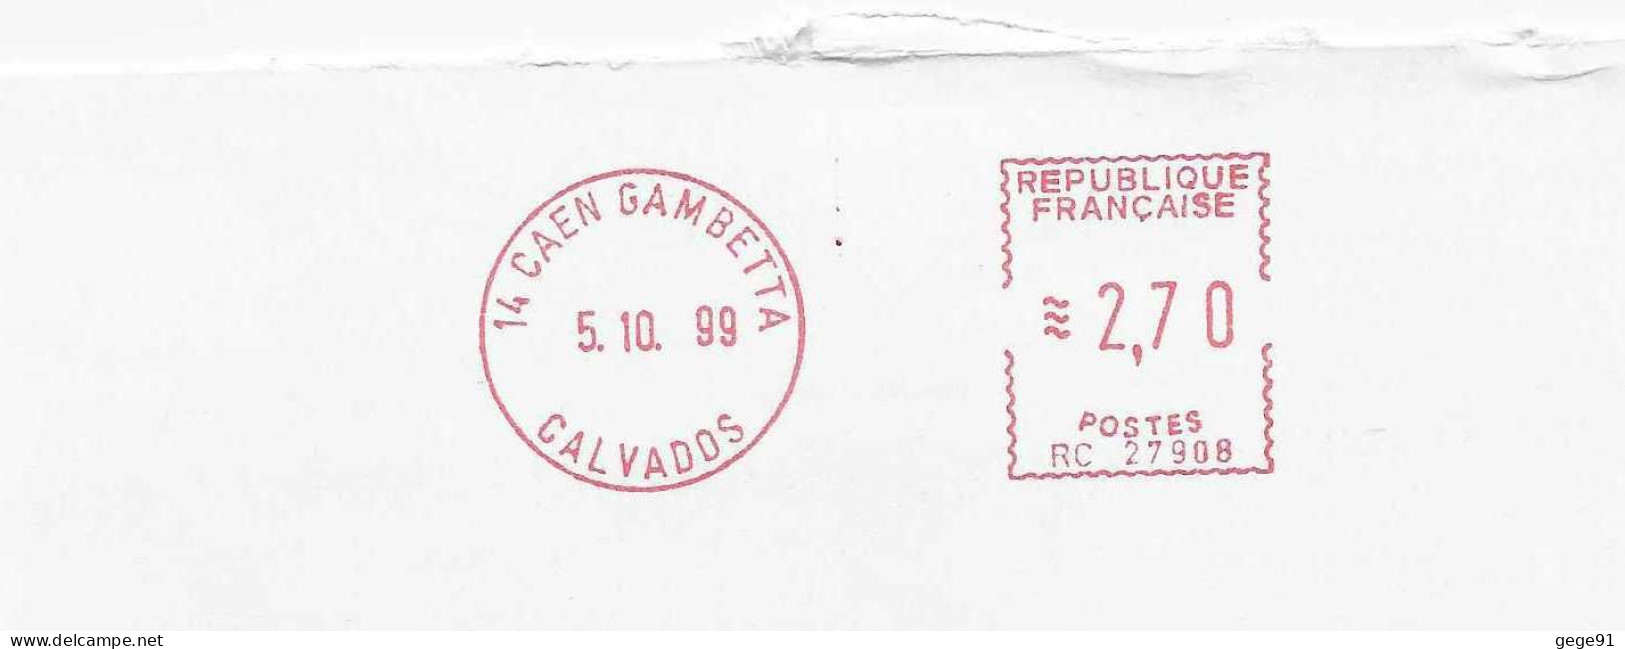 Ema Neopost RC - Caen Gambetta - Enveloppe Entière - EMA (Printer Machine)